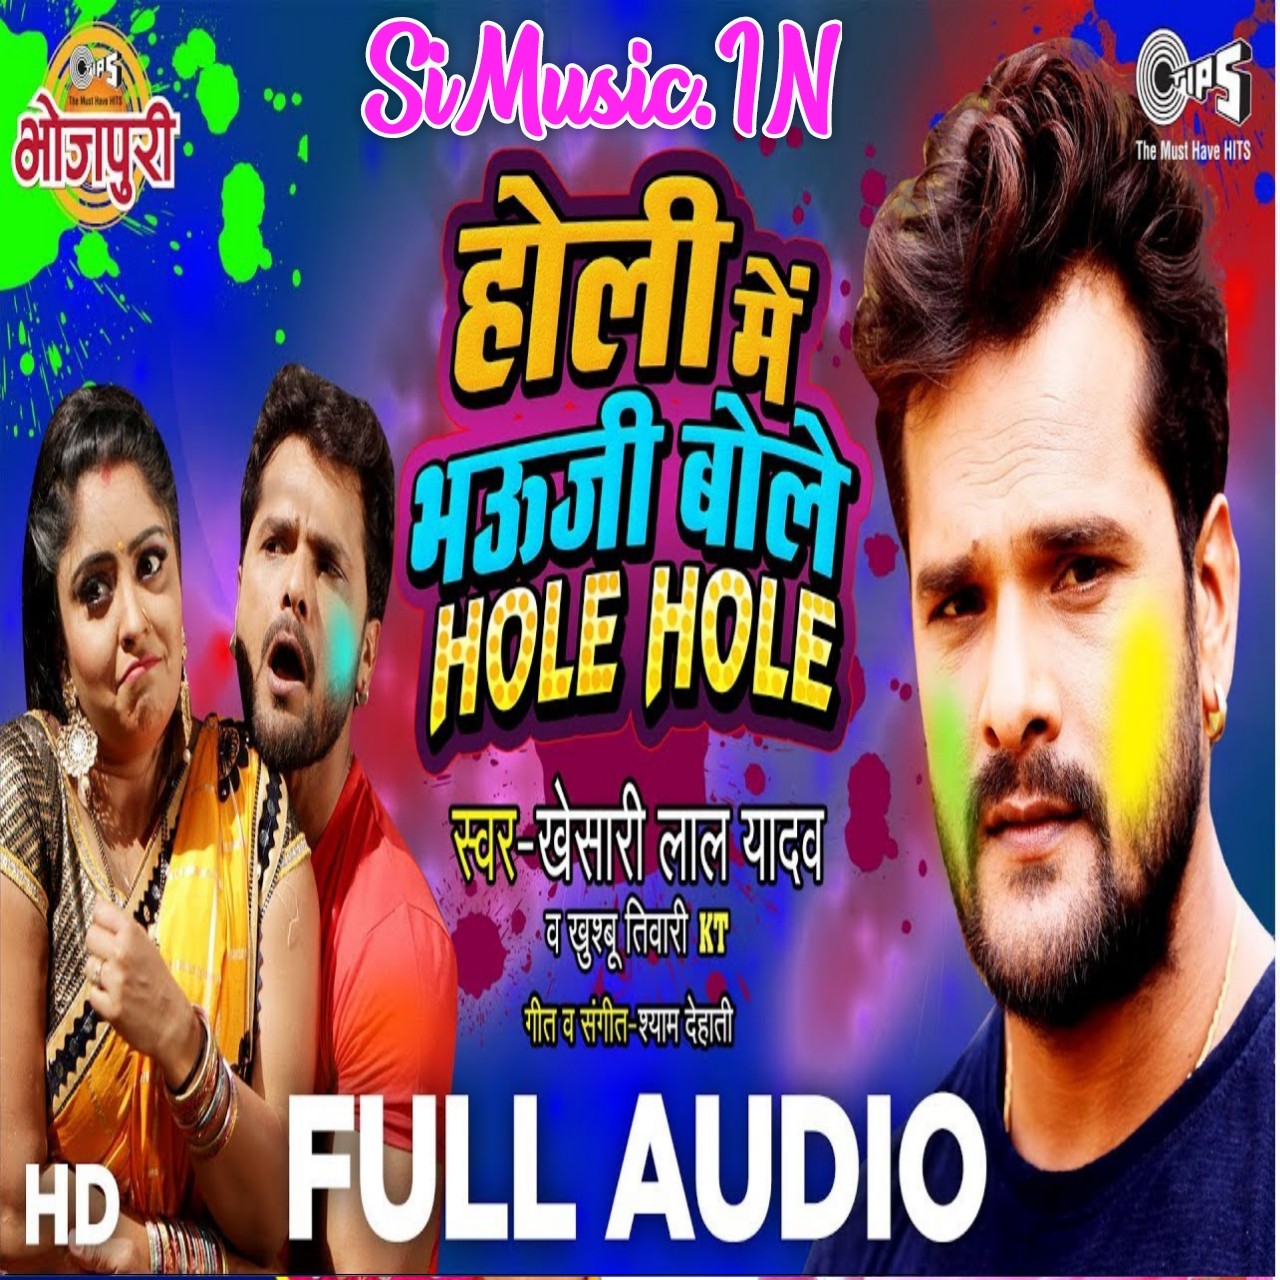 Holi Me Bhauji Bole Hole Hole Khesari Lal Yadav Khushboo Tiwari KT 2020 Mp3 Songs